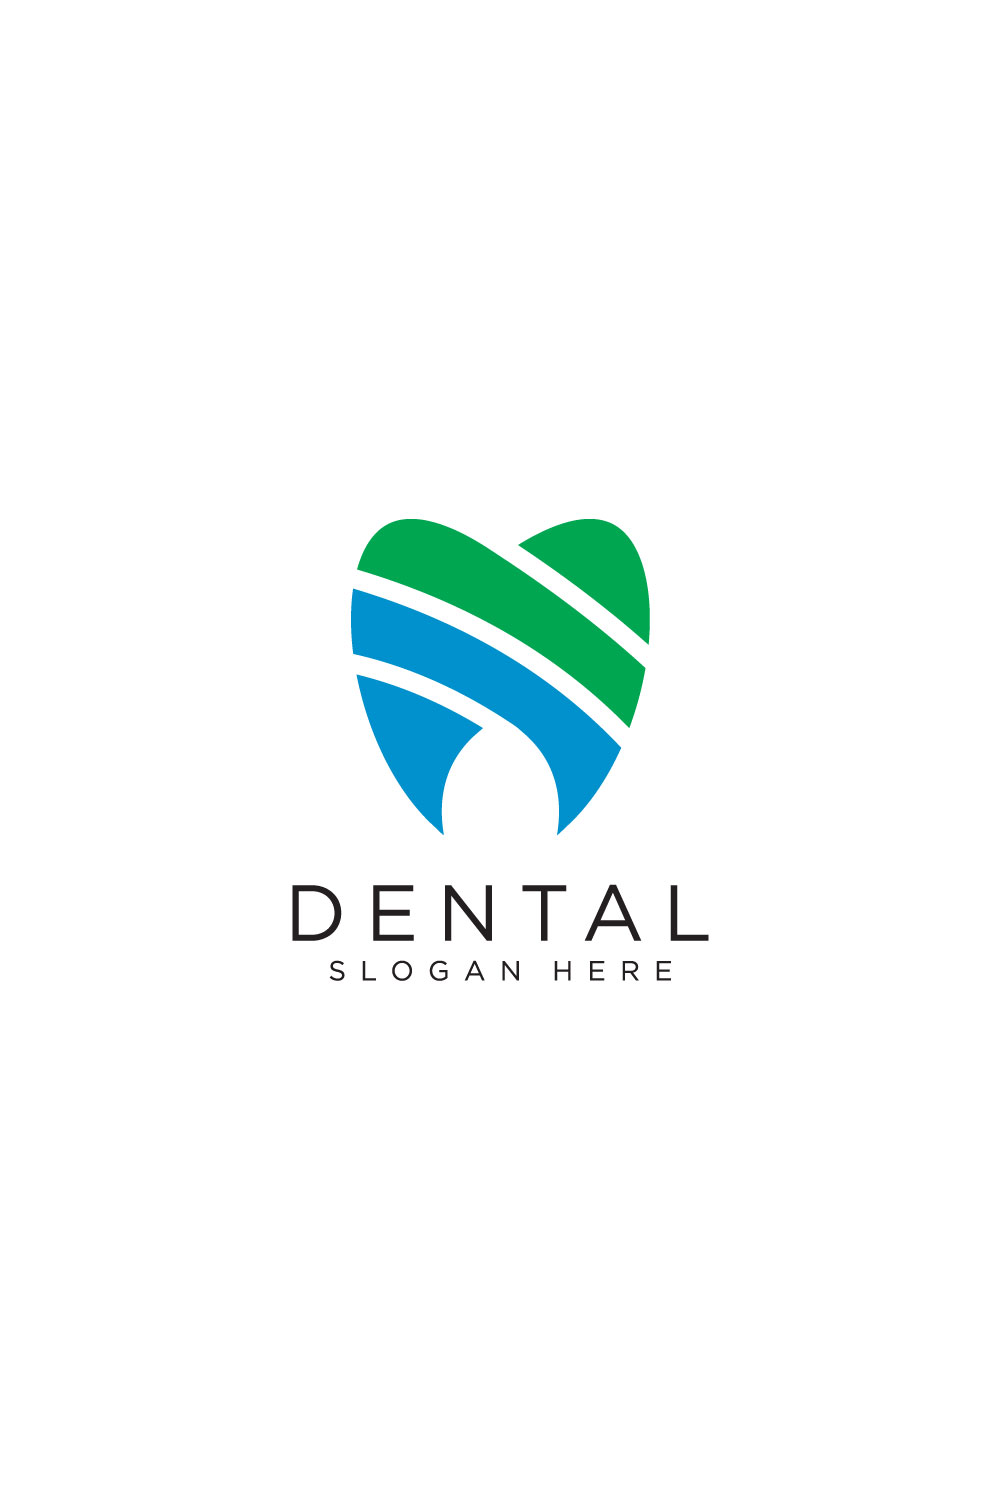 dental logo design vector pinterest preview image.